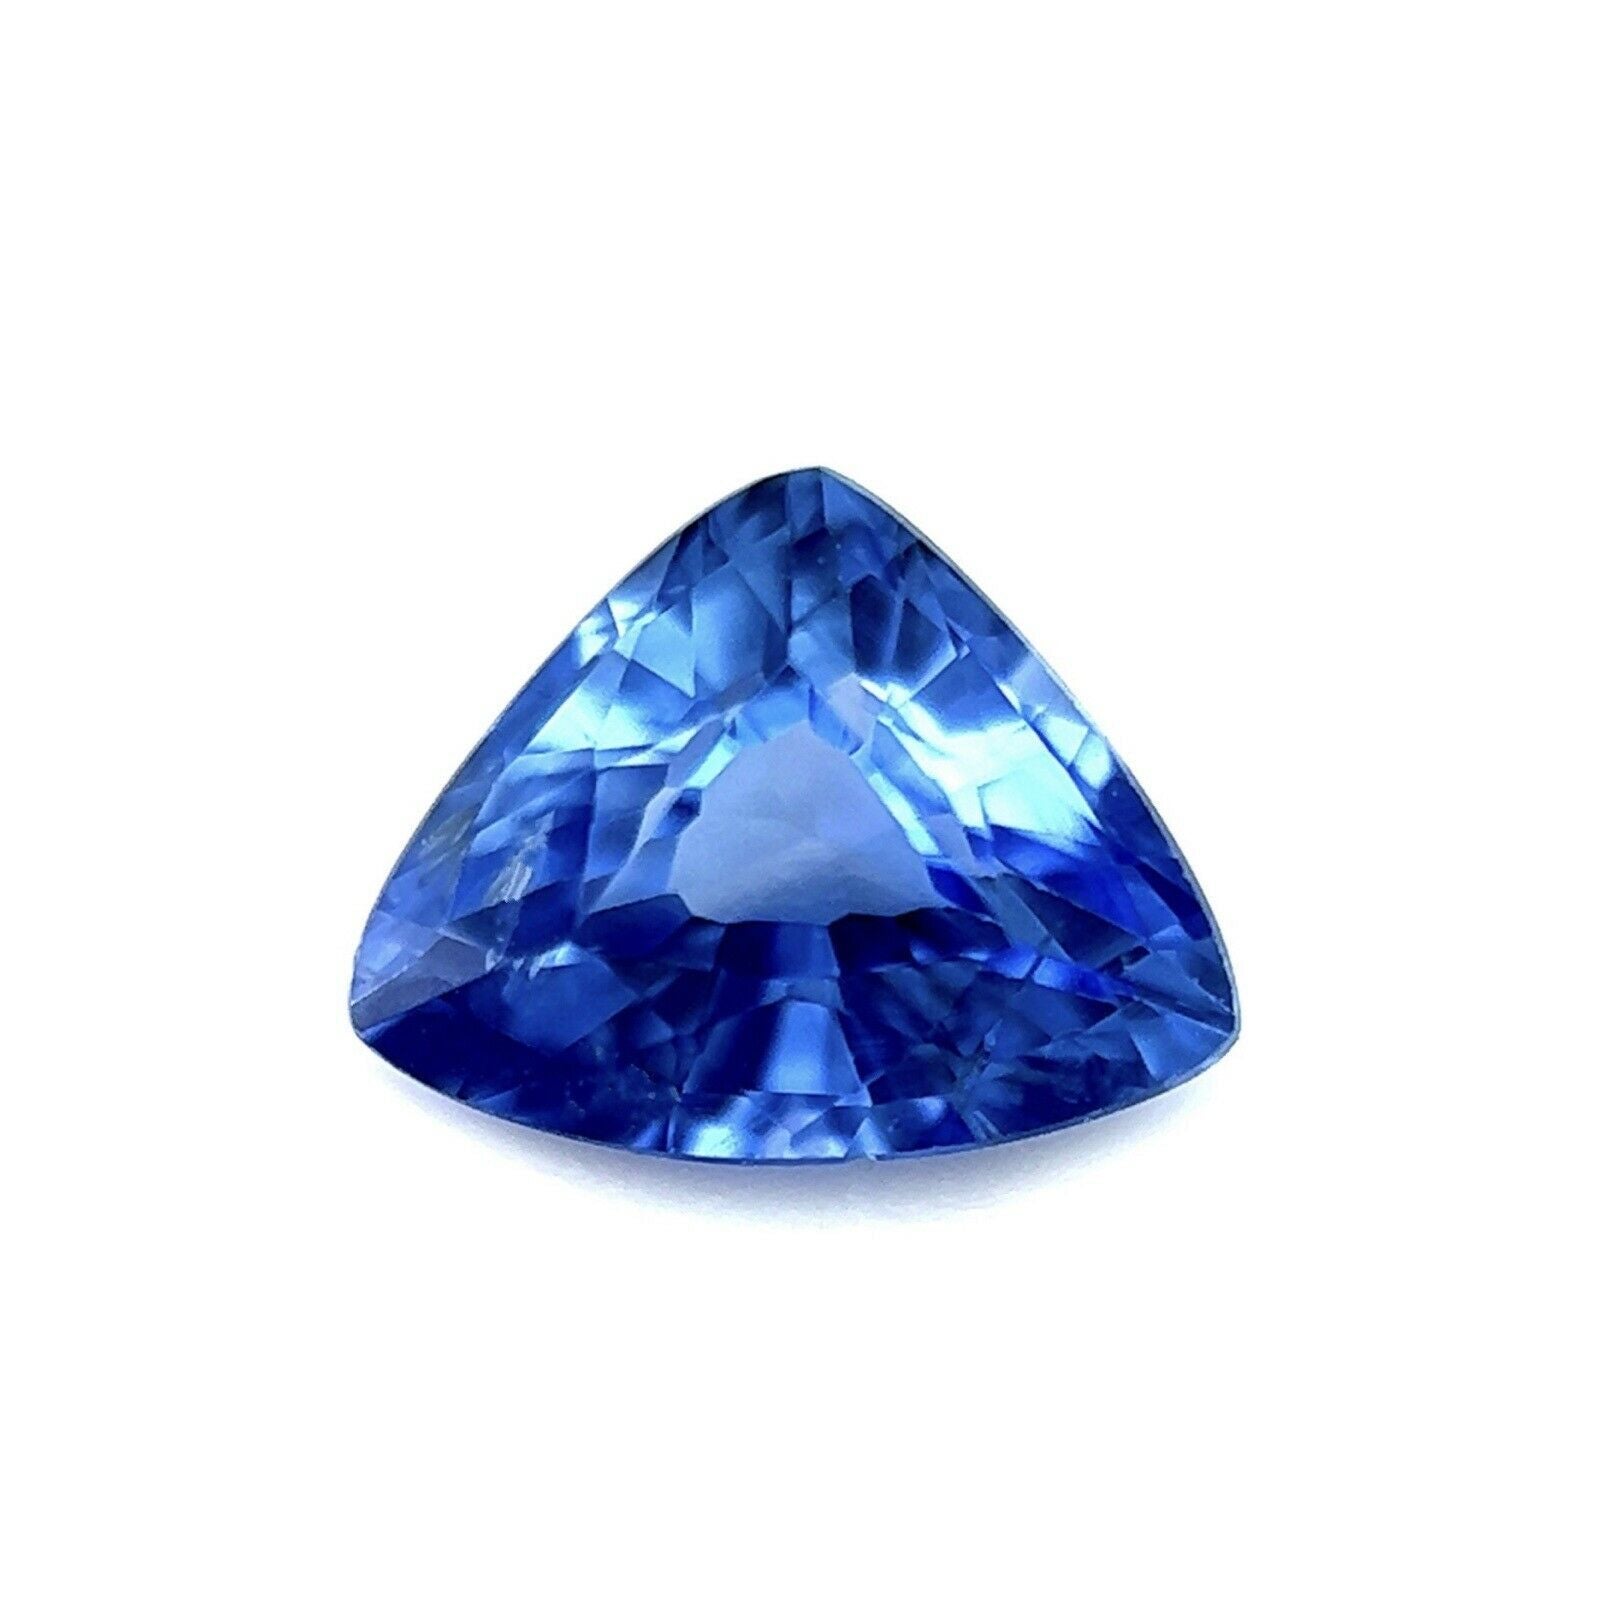 Vivid Ceylon Cornflower Blue Sapphire 0.79ct Trillion Triangle Cut Gem 6.4x5mm